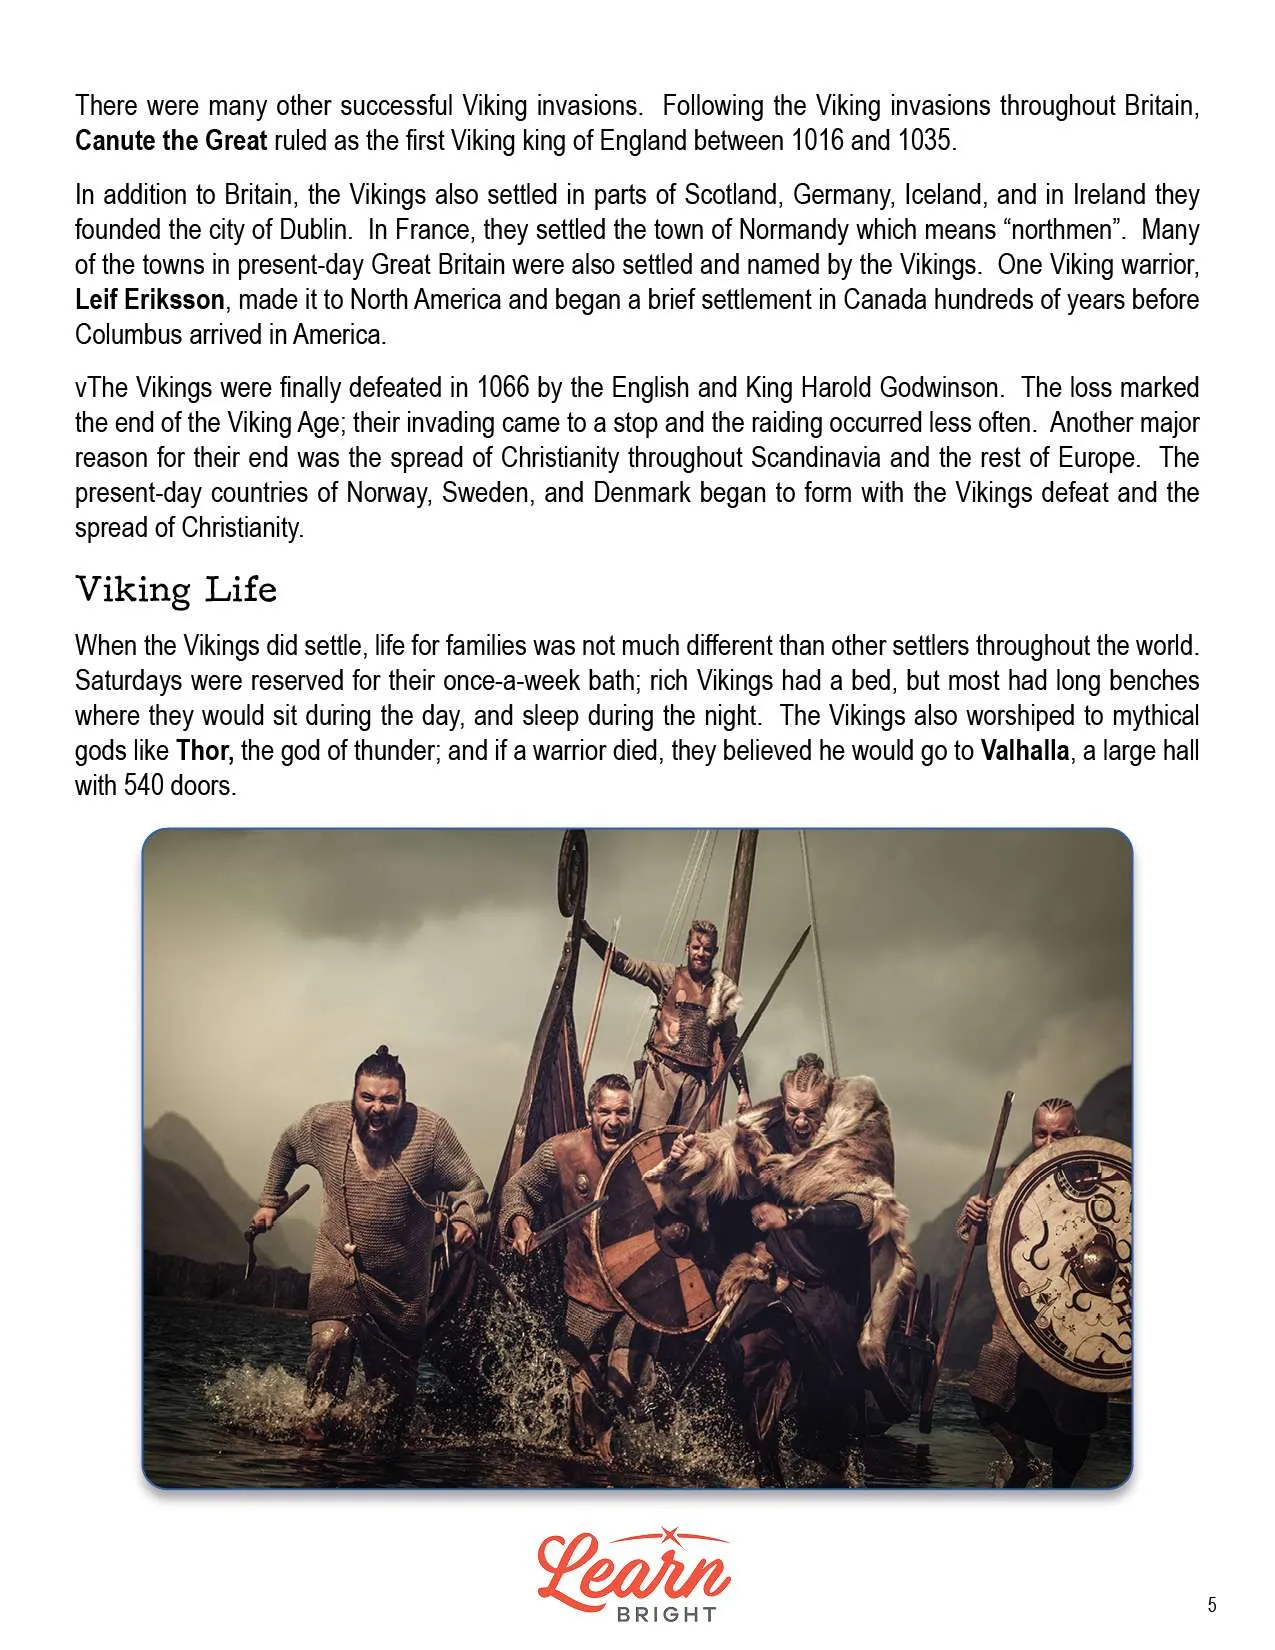 vikings essay introduction